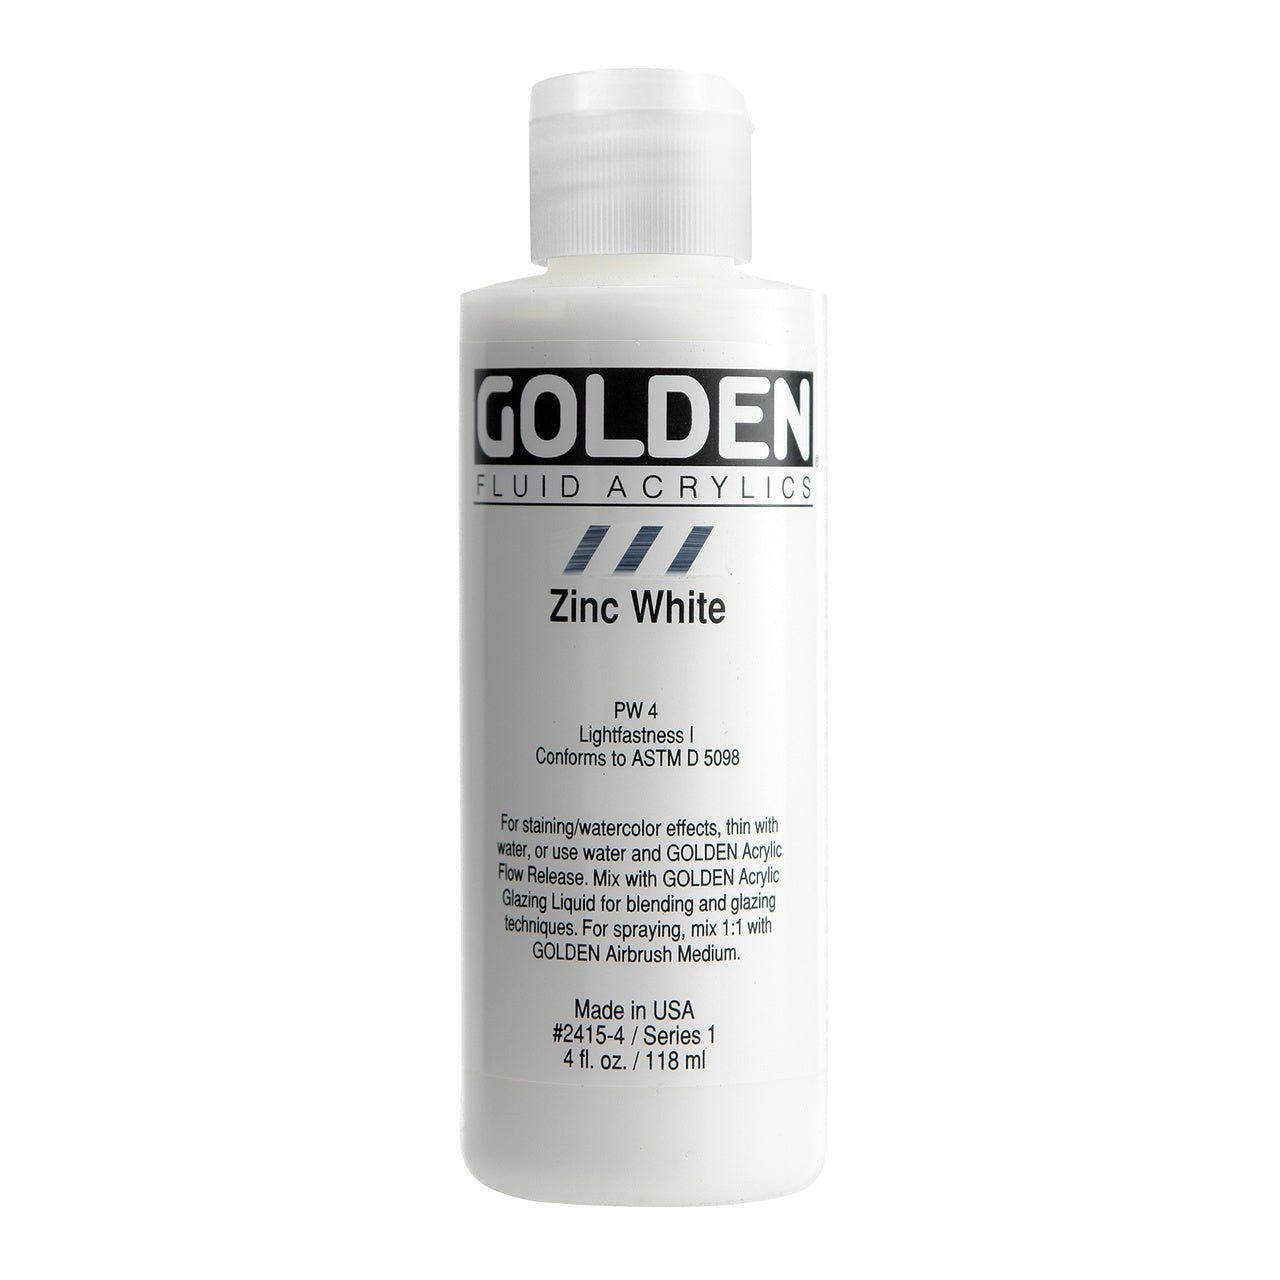 Golden Fluid Acrylic Zinc White 4 oz - merriartist.com